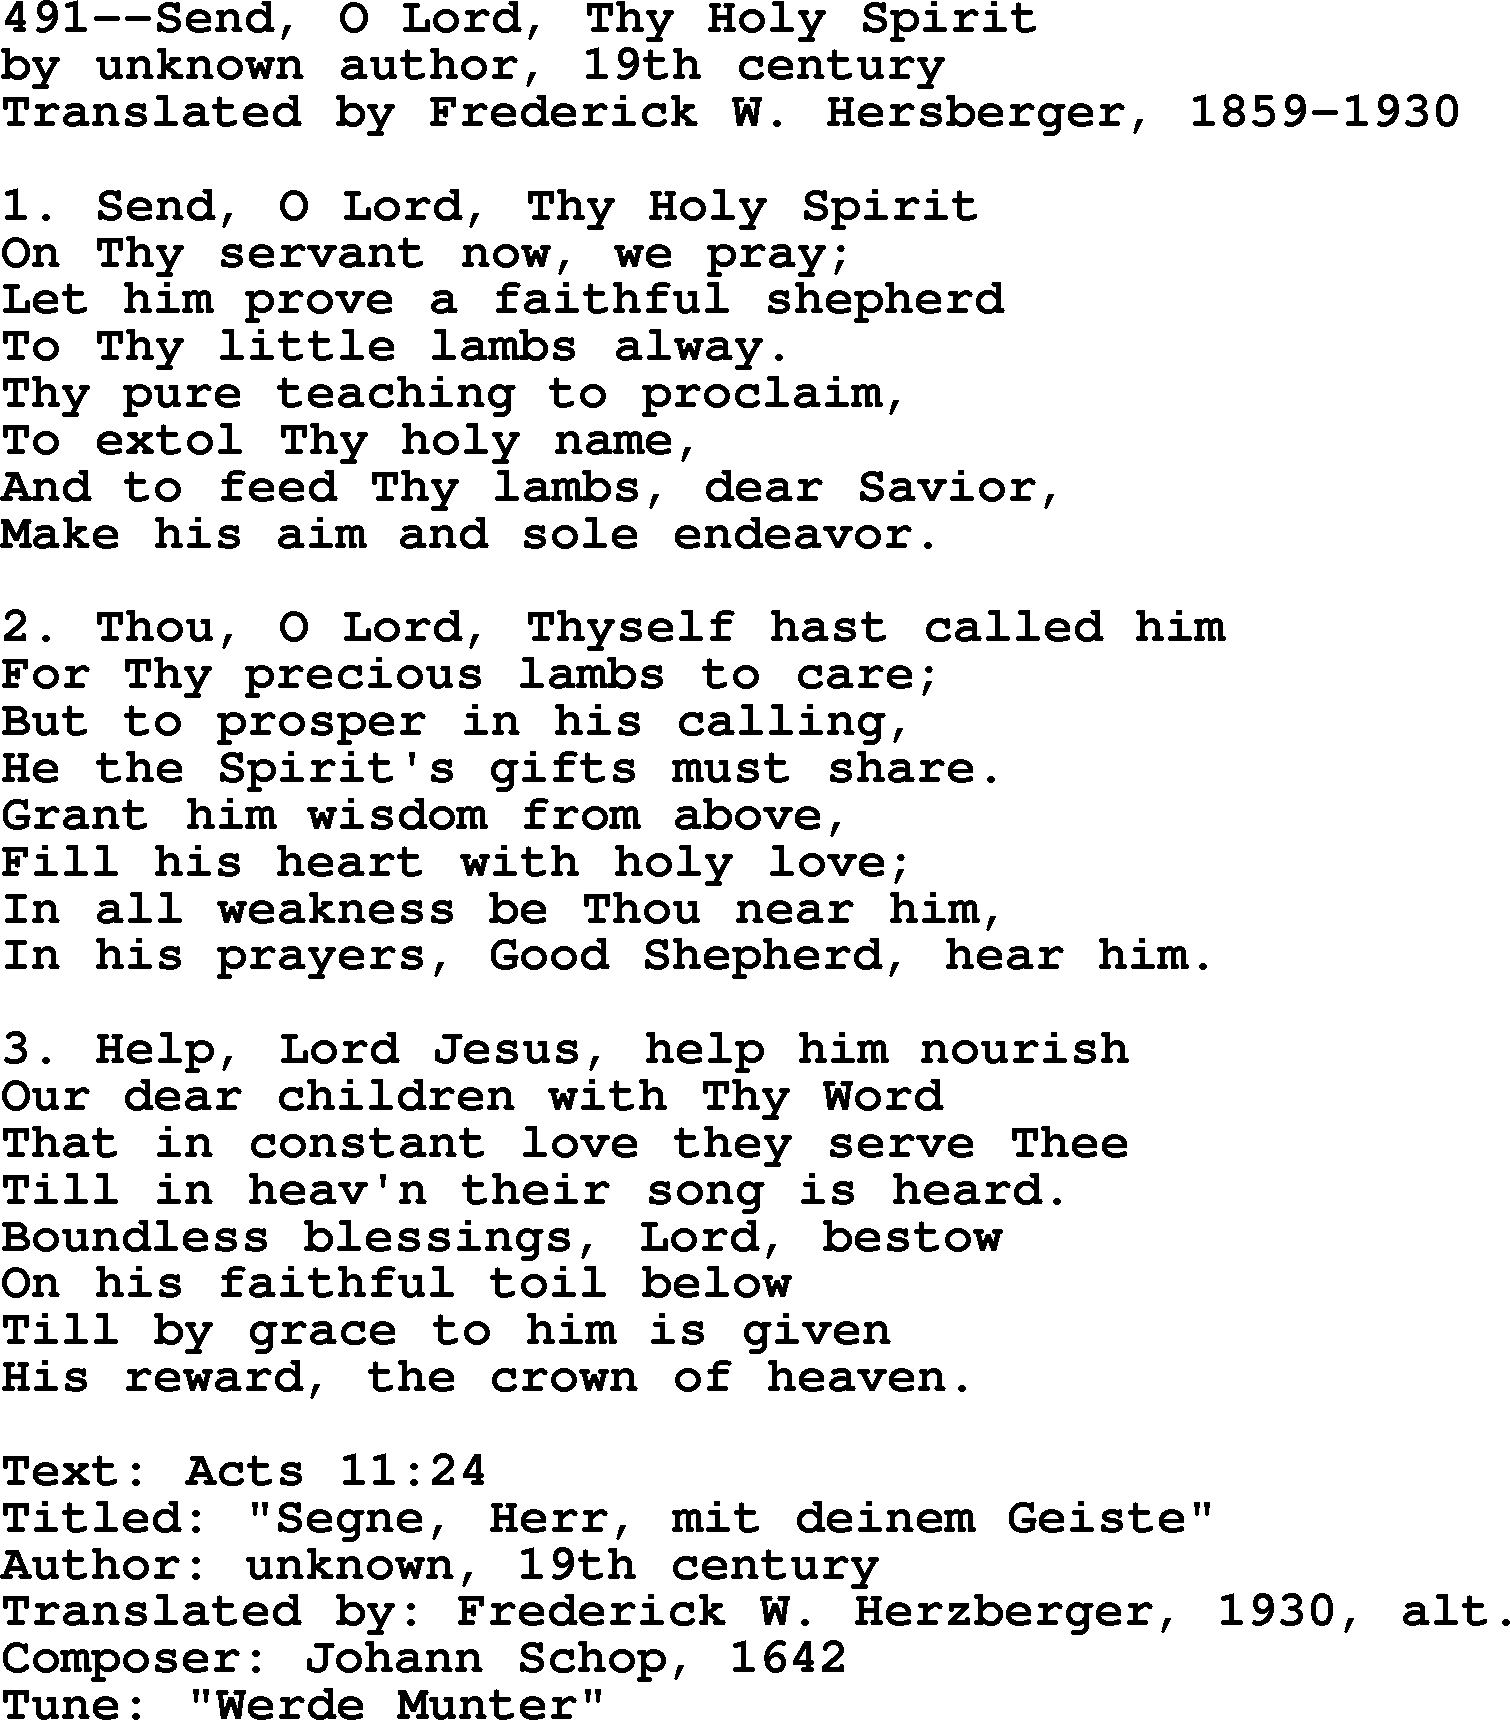 Lutheran Hymn: 491--Send, O Lord, Thy Holy Spirit.txt lyrics with PDF